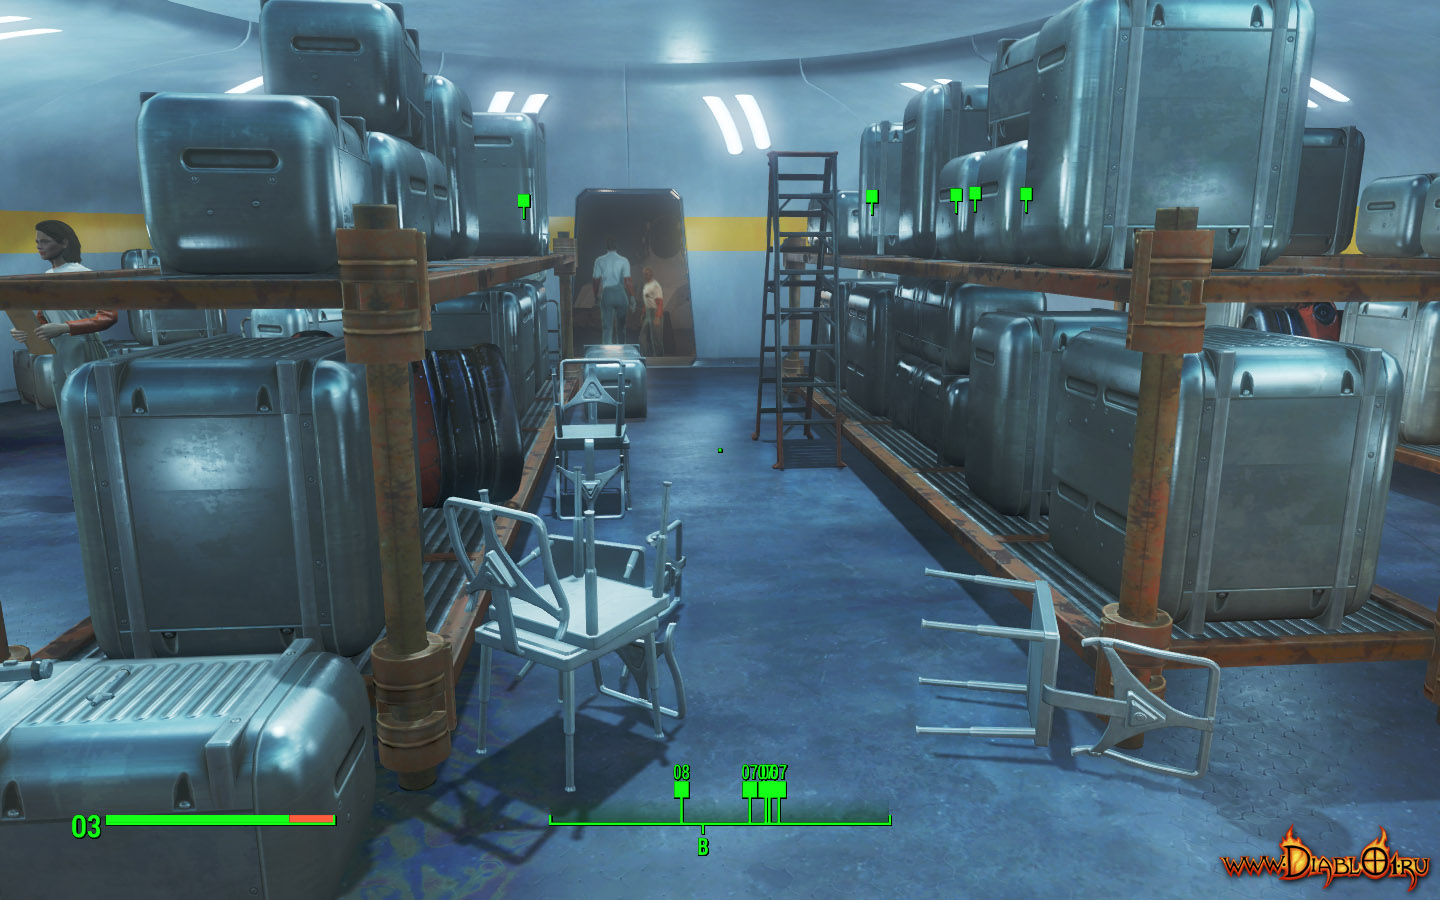 Fallout 4 под землей или под прикрытием (119) фото